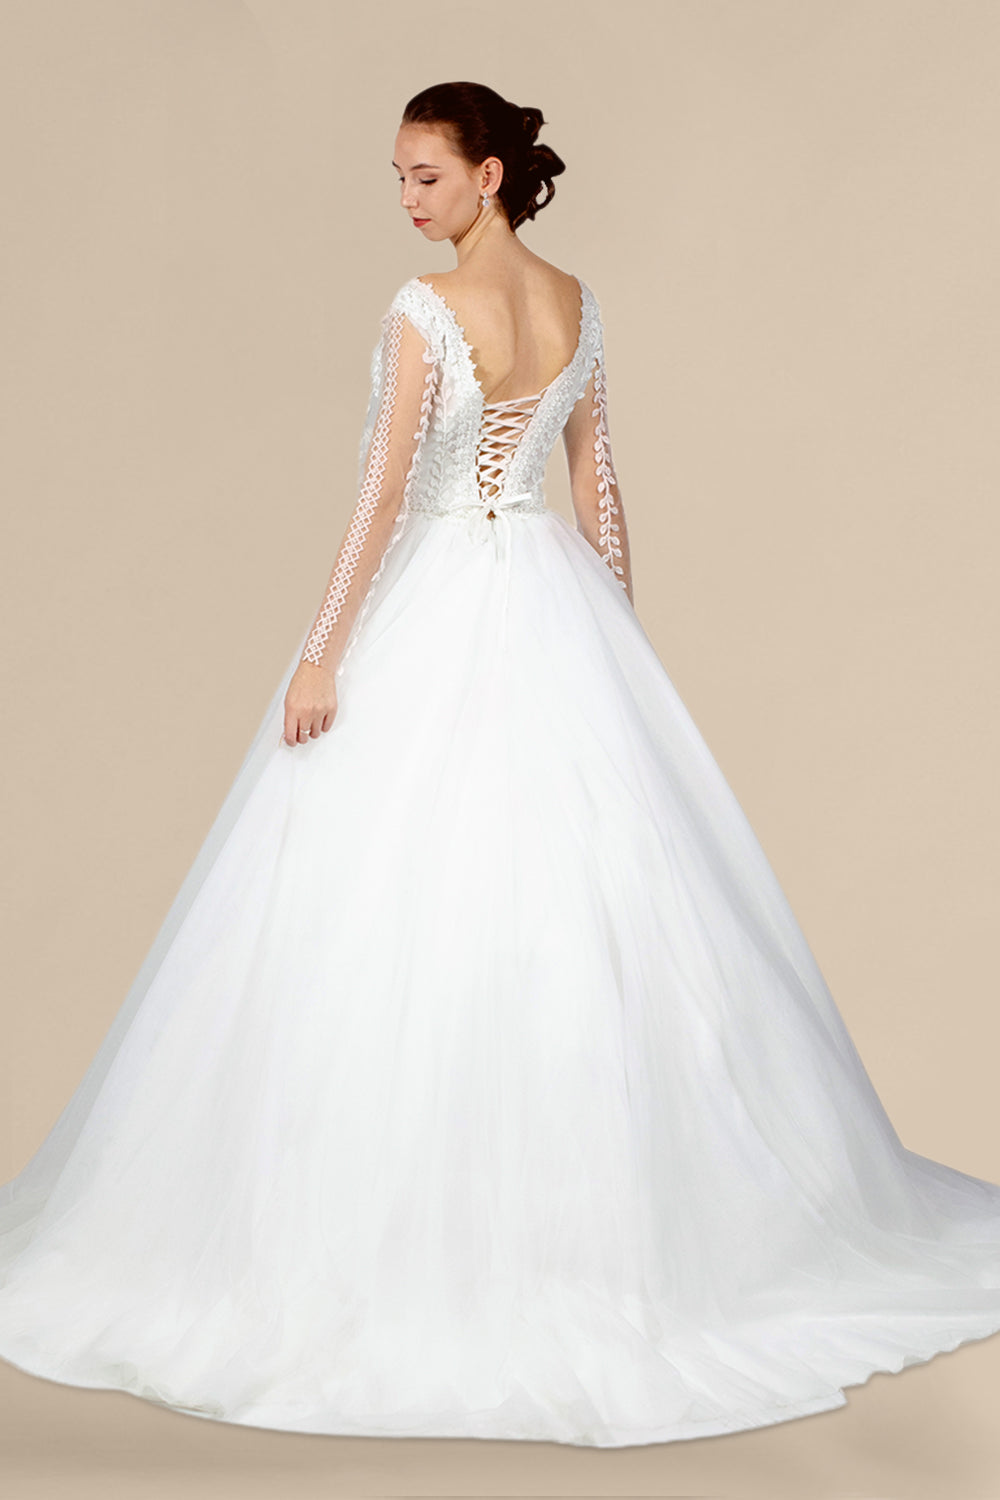 custom made princess wedding dresses long sleeve bridal gowns perth australia envious bridal & formal